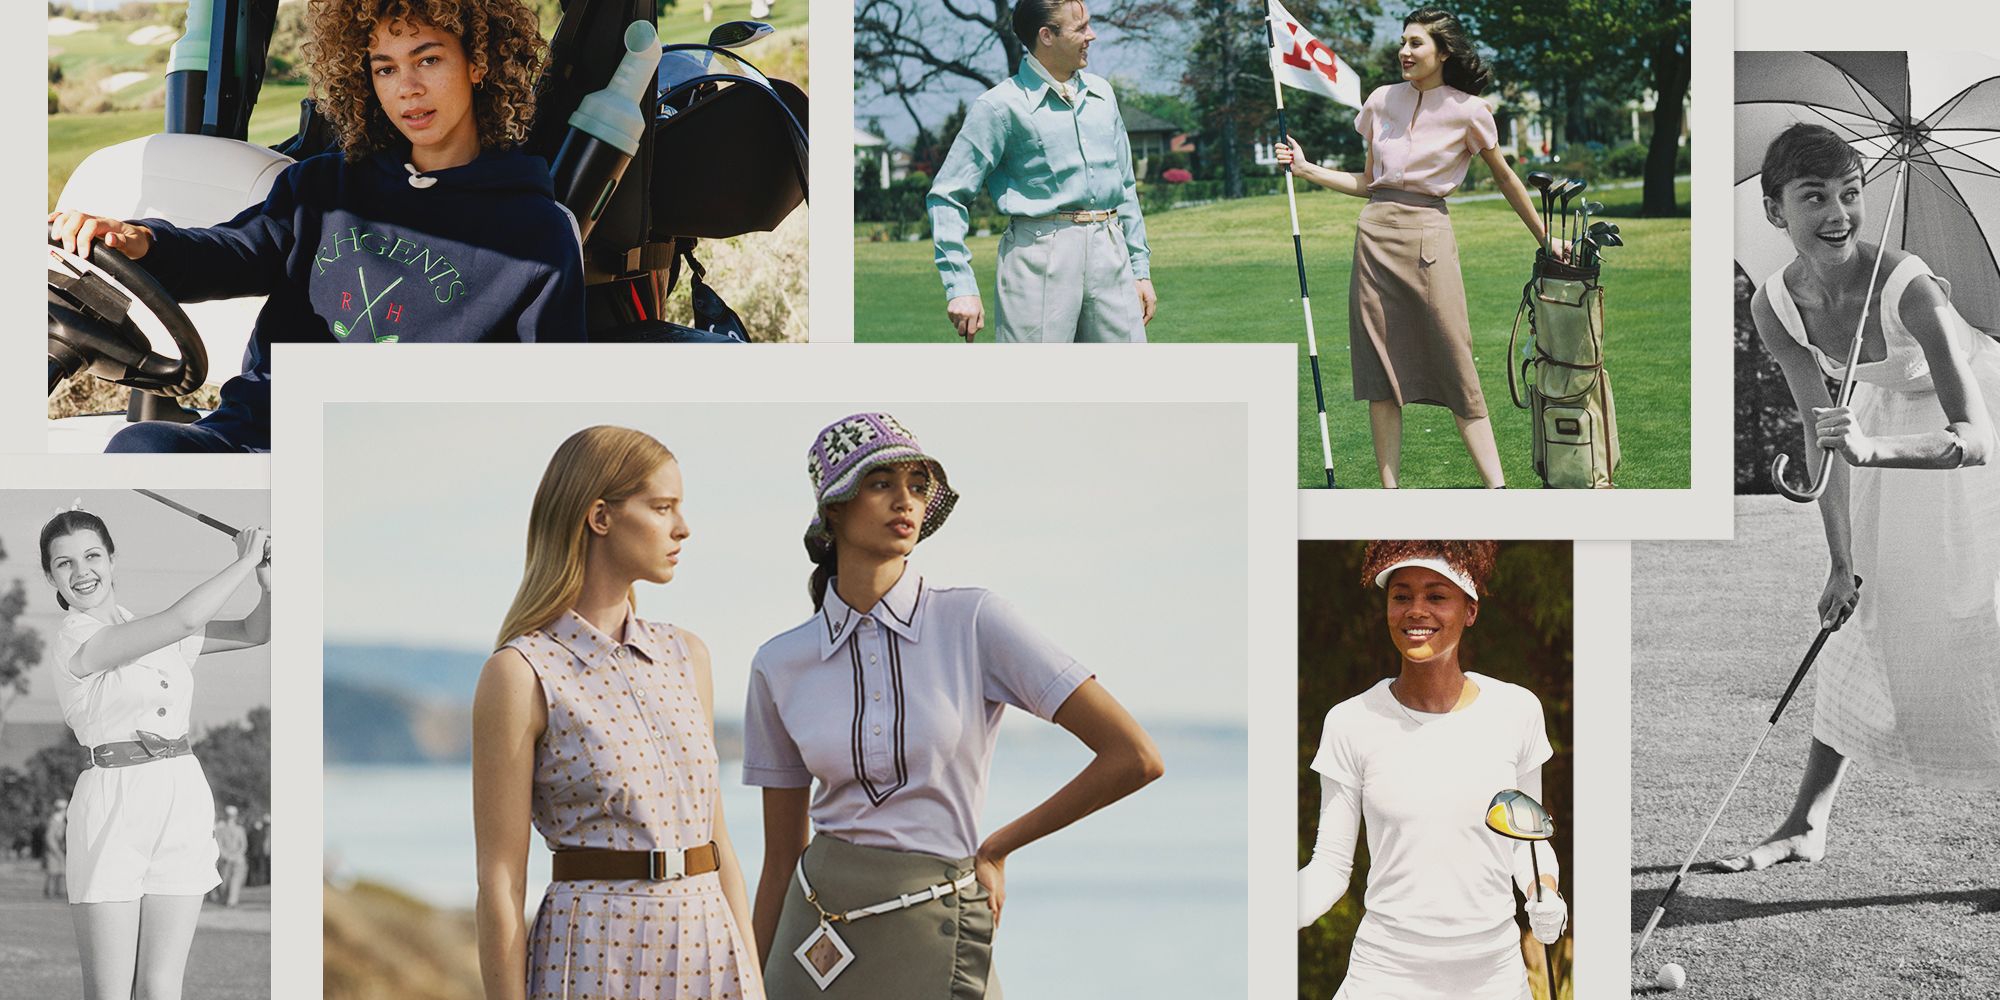 The Golf Fashion Trend Will Replace Tenniscore